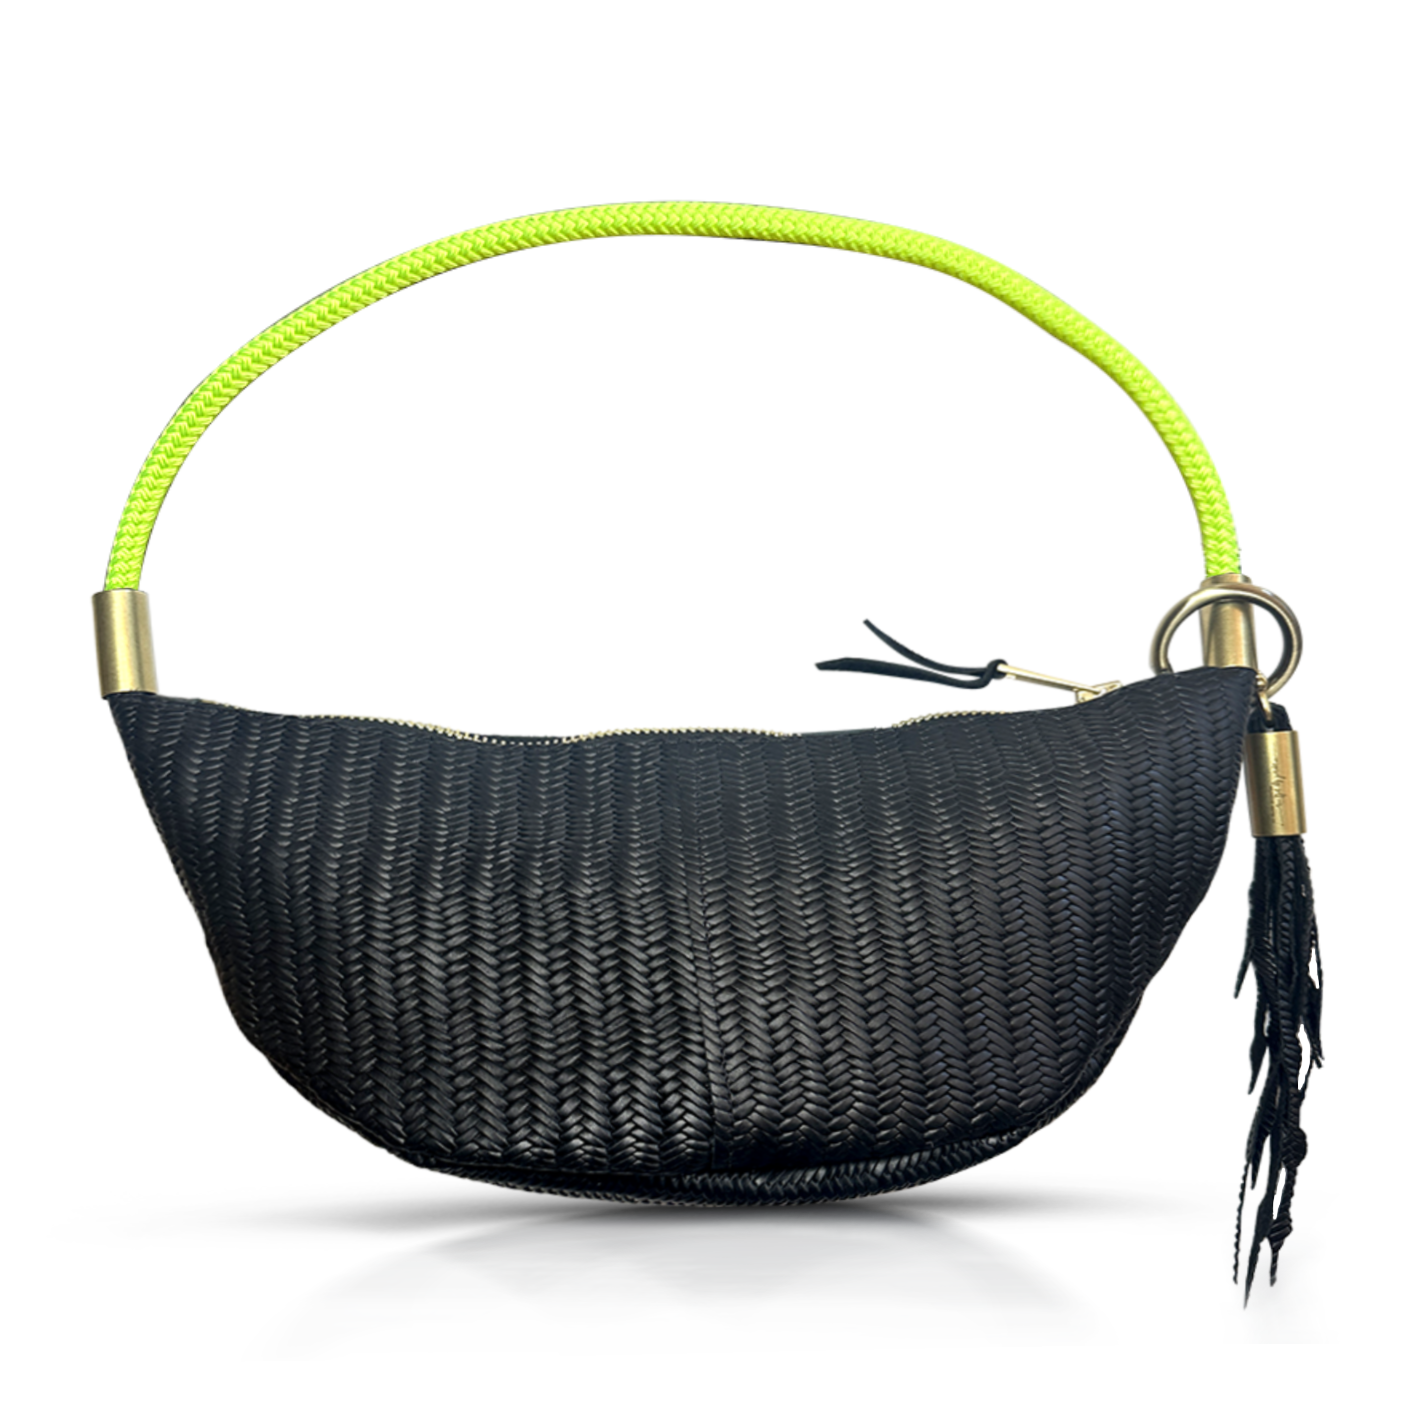 black basketweave leather sling bag with neon yellow dock line handle